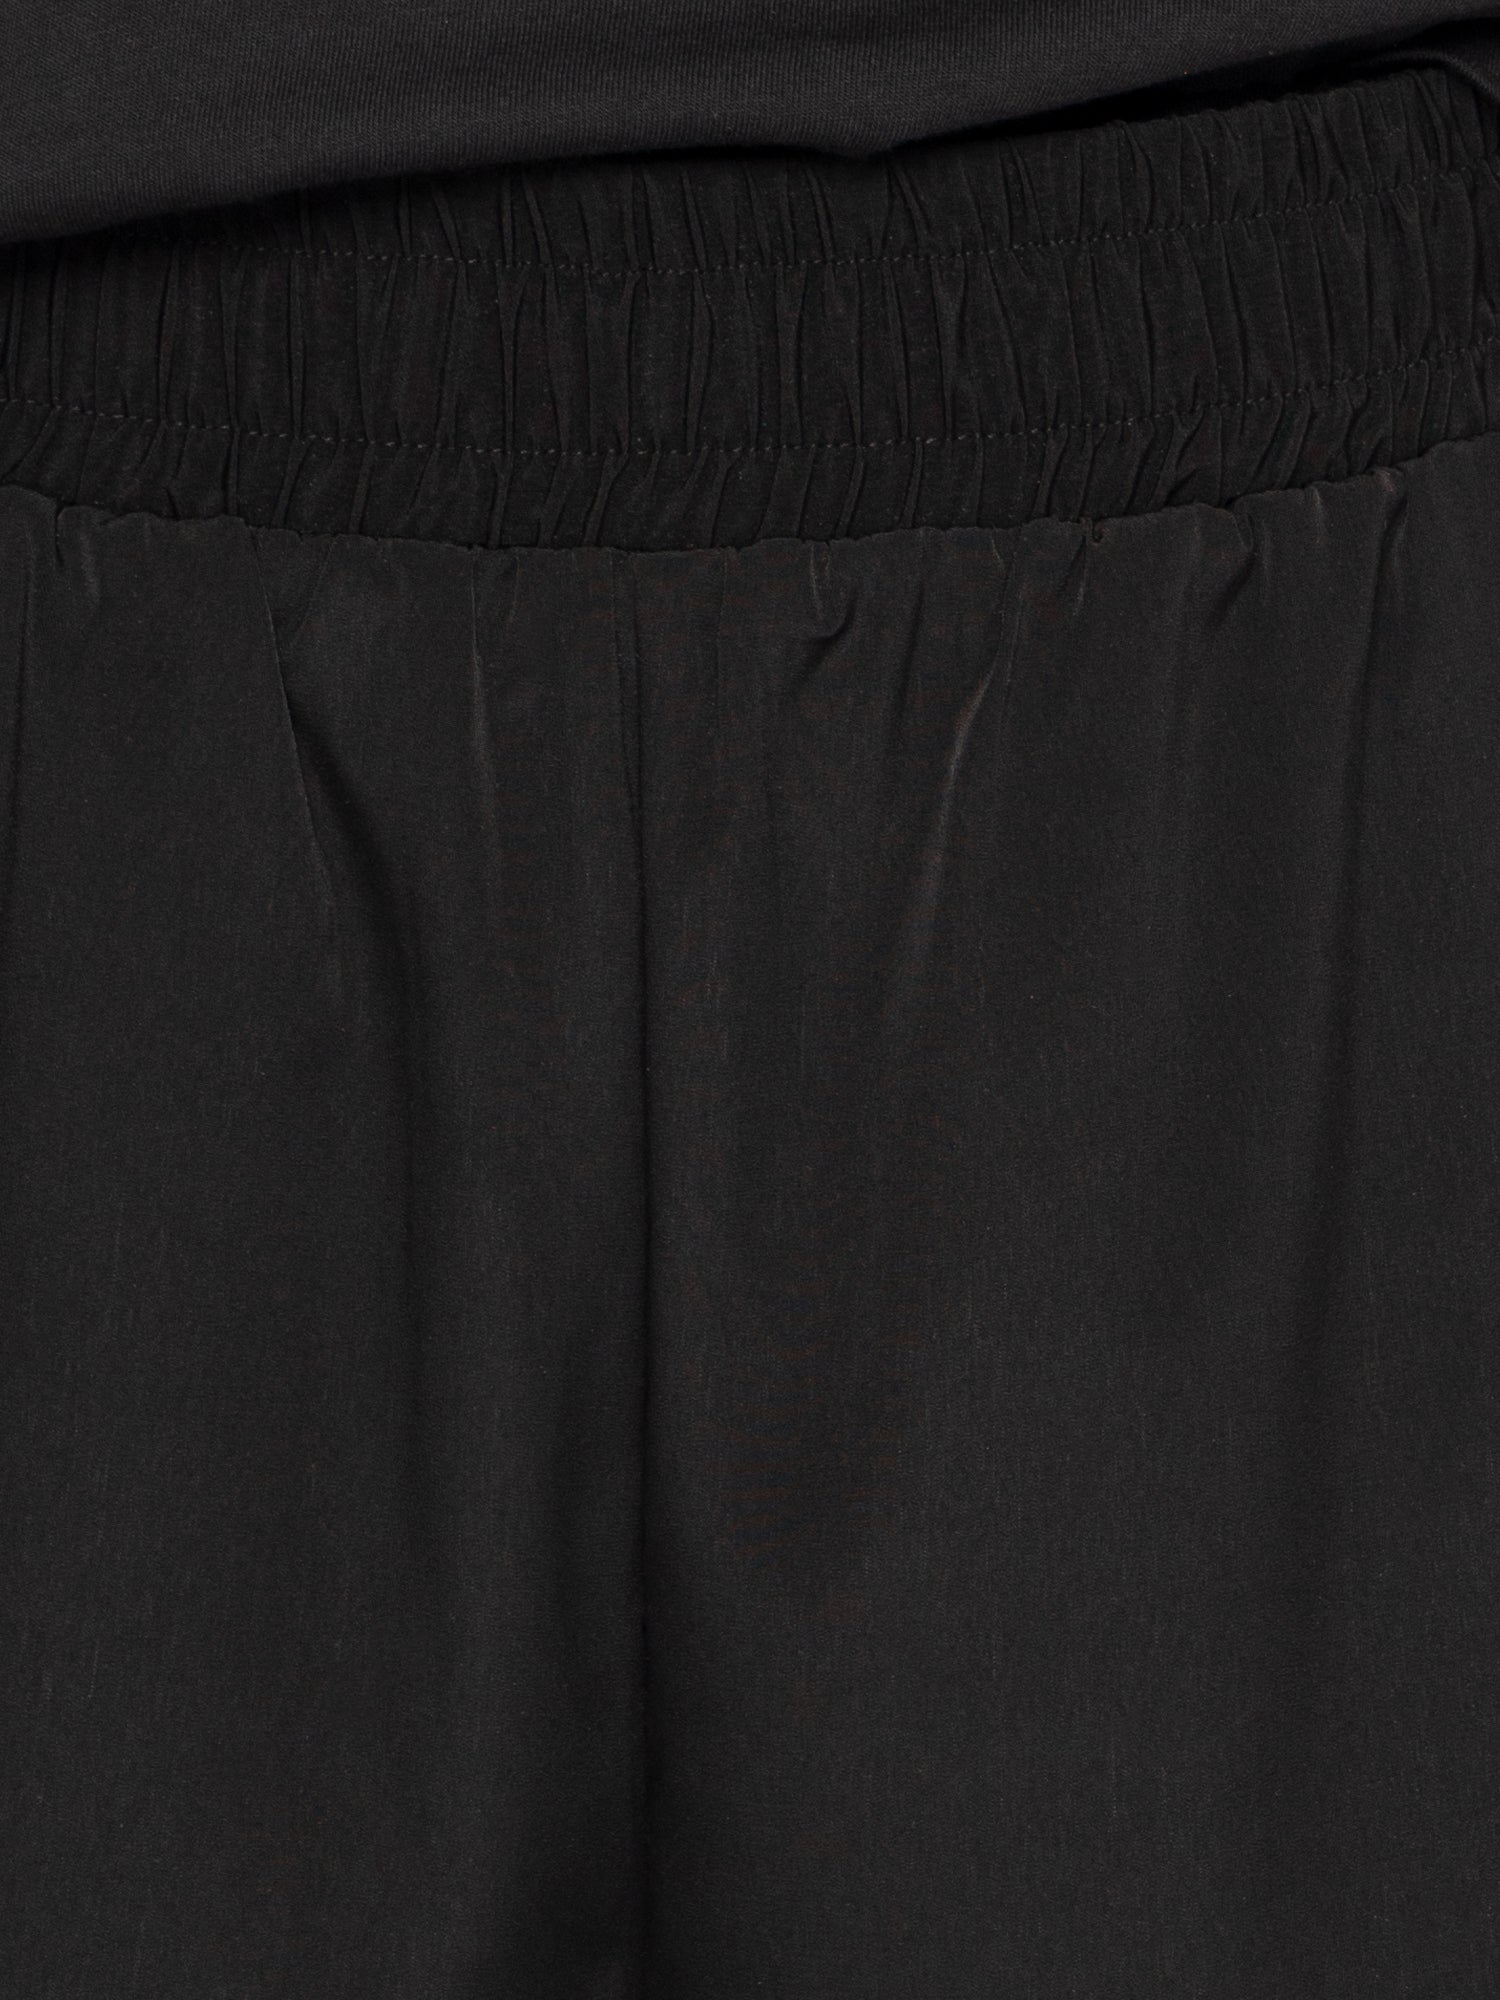 rosin studios black silky satin basketball short elastic waistband pockets